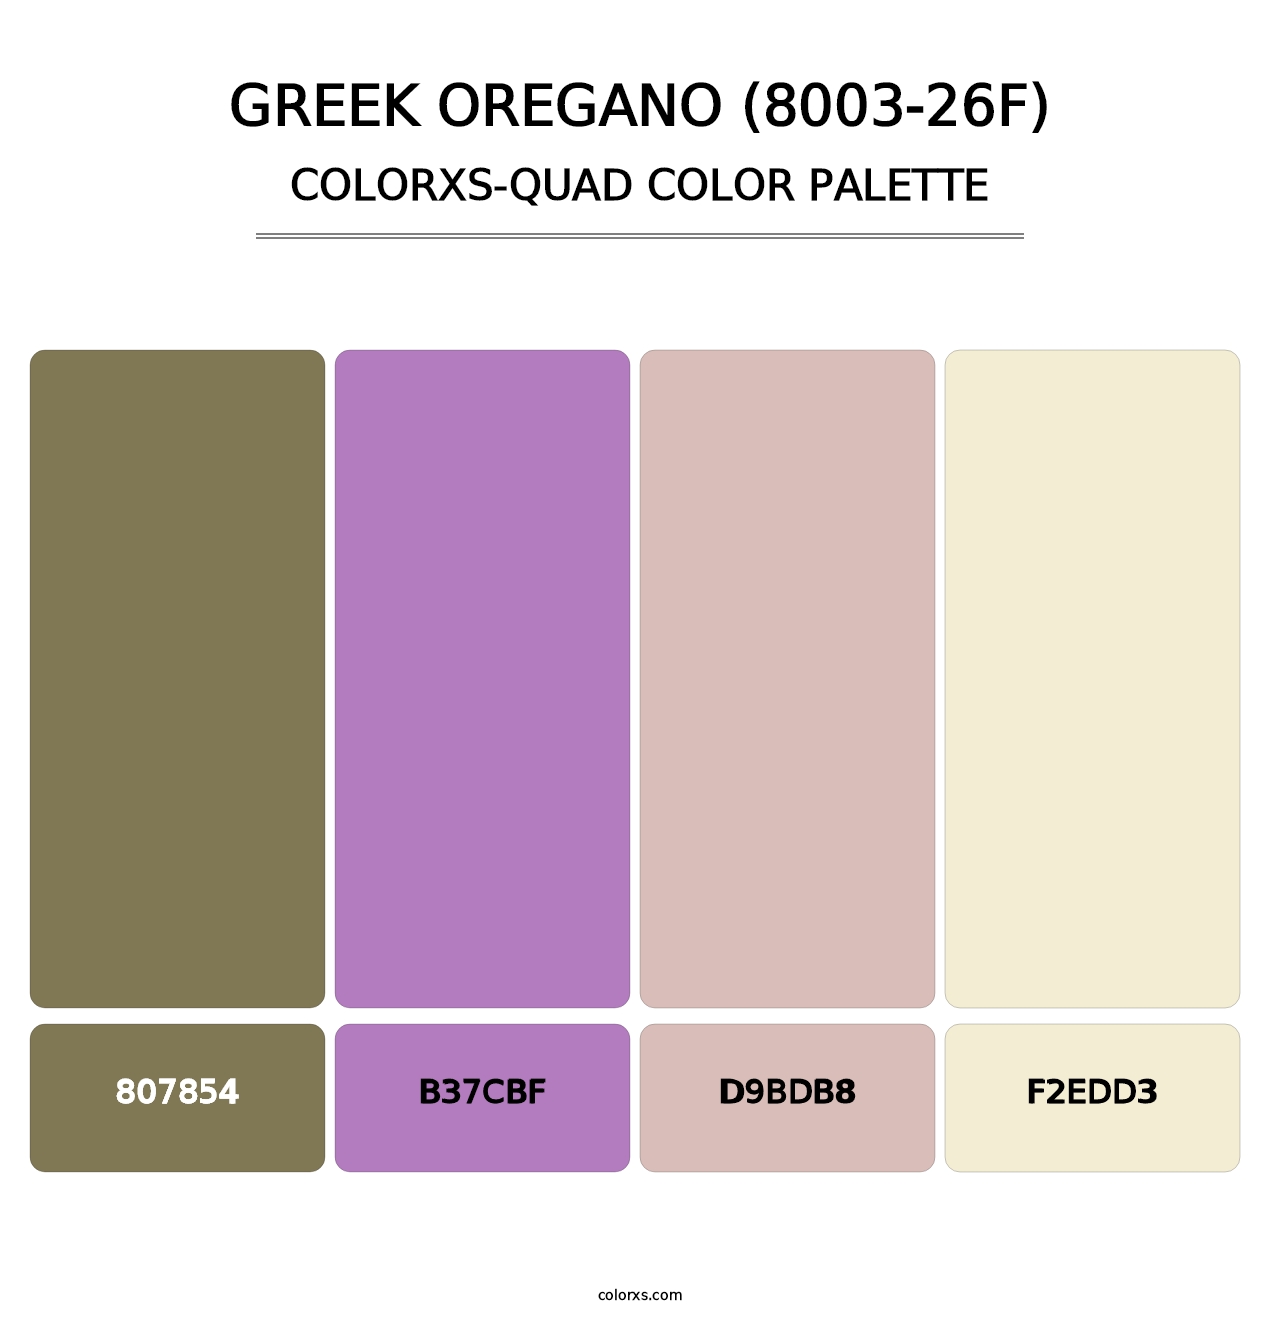 Greek Oregano (8003-26F) - Colorxs Quad Palette